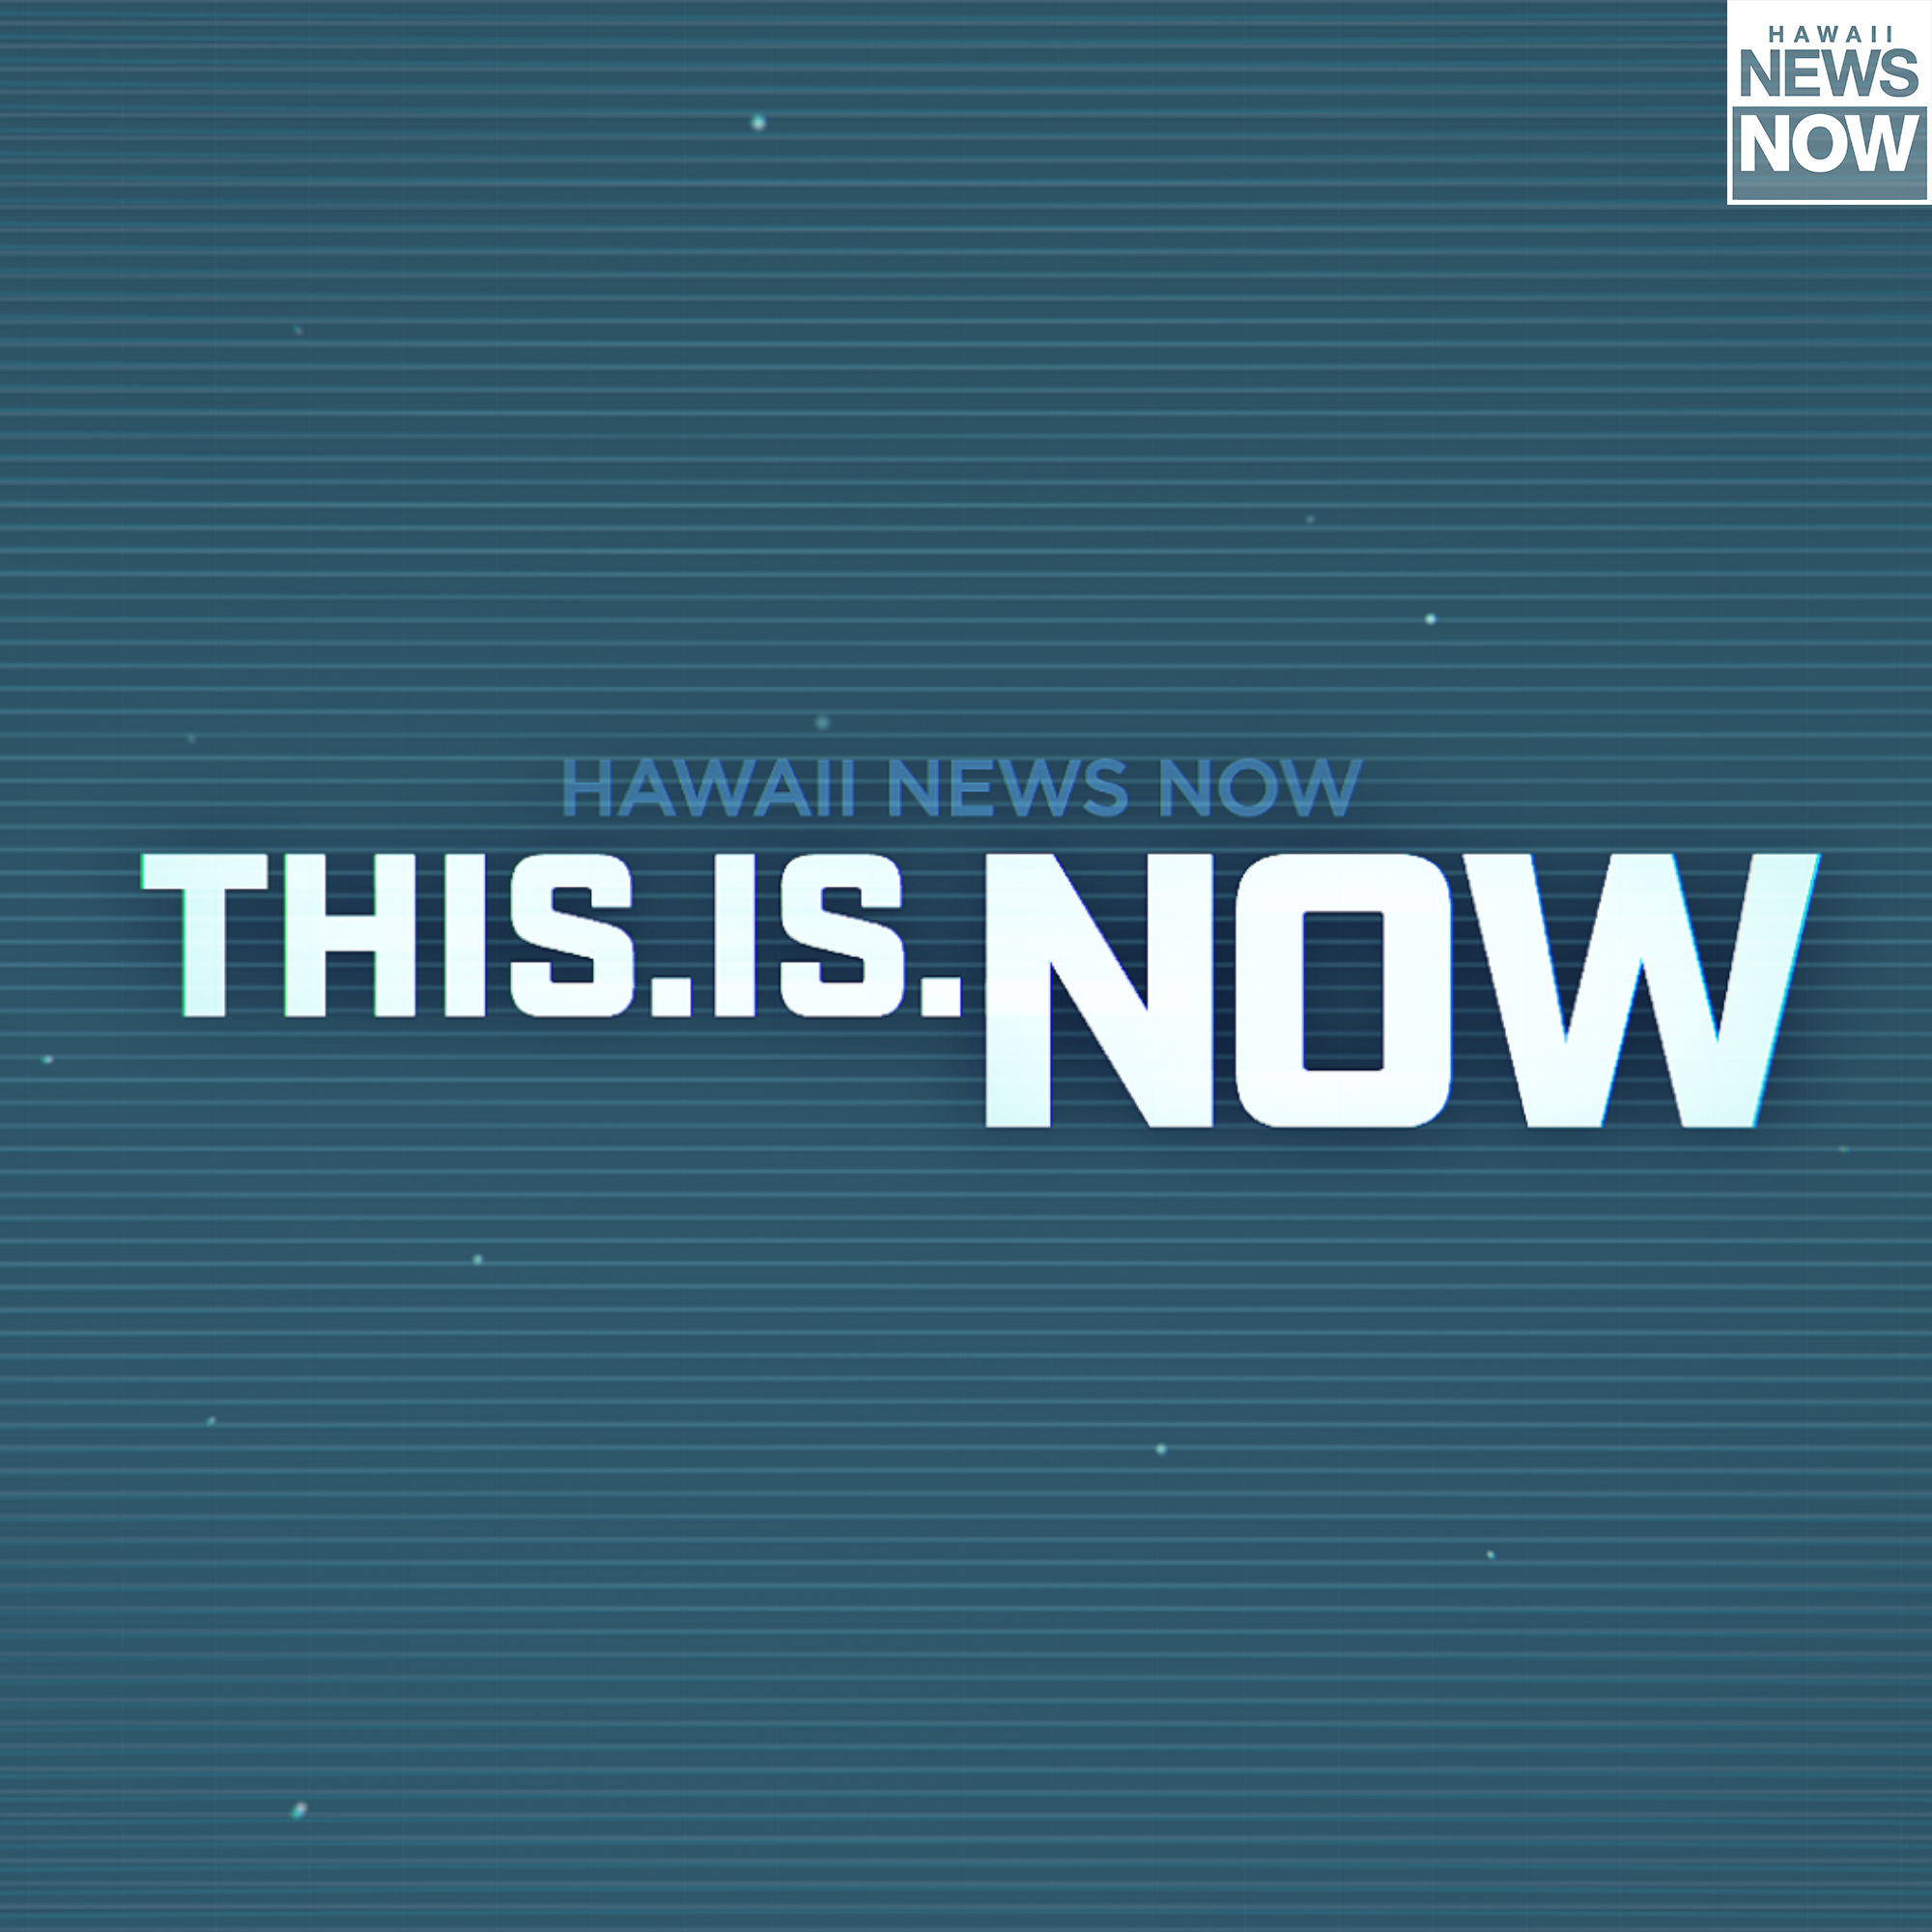 Hawaii news now